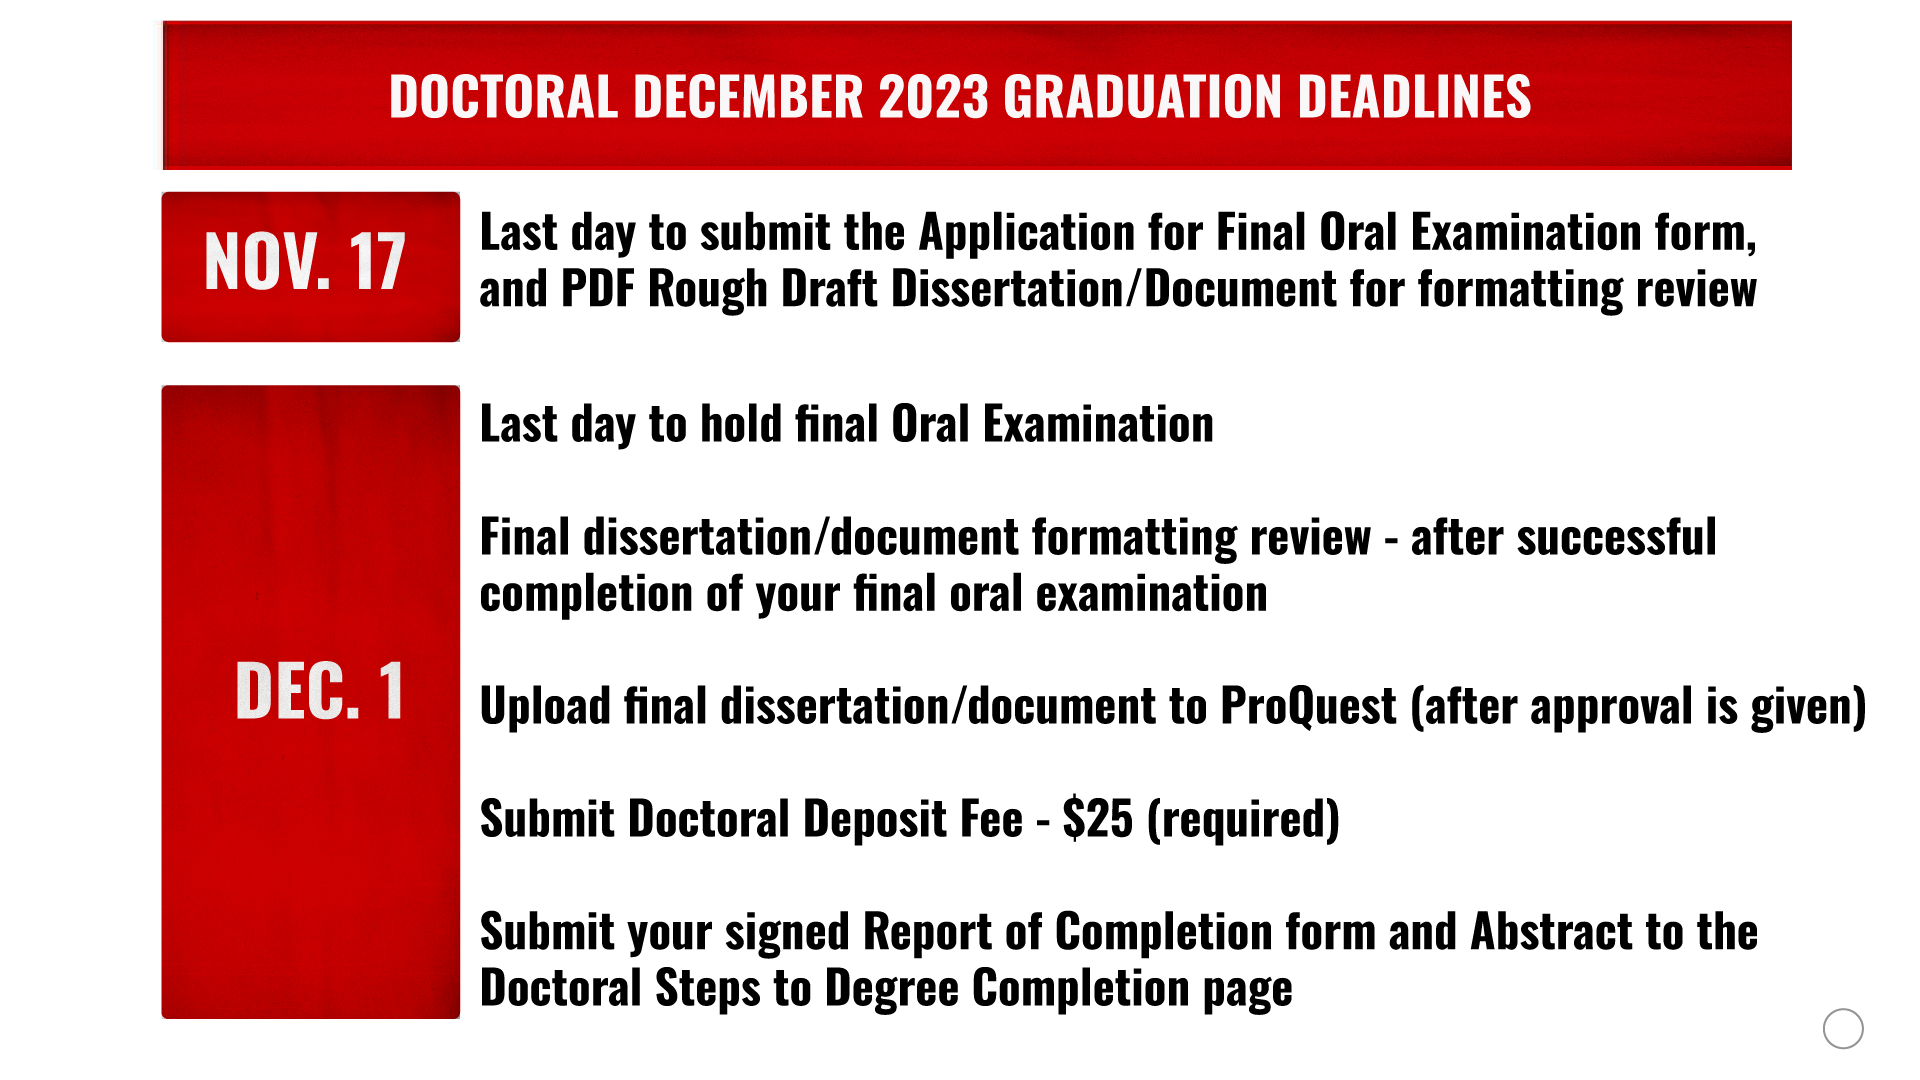 December 2023 Doctoral Graduation Deadlines